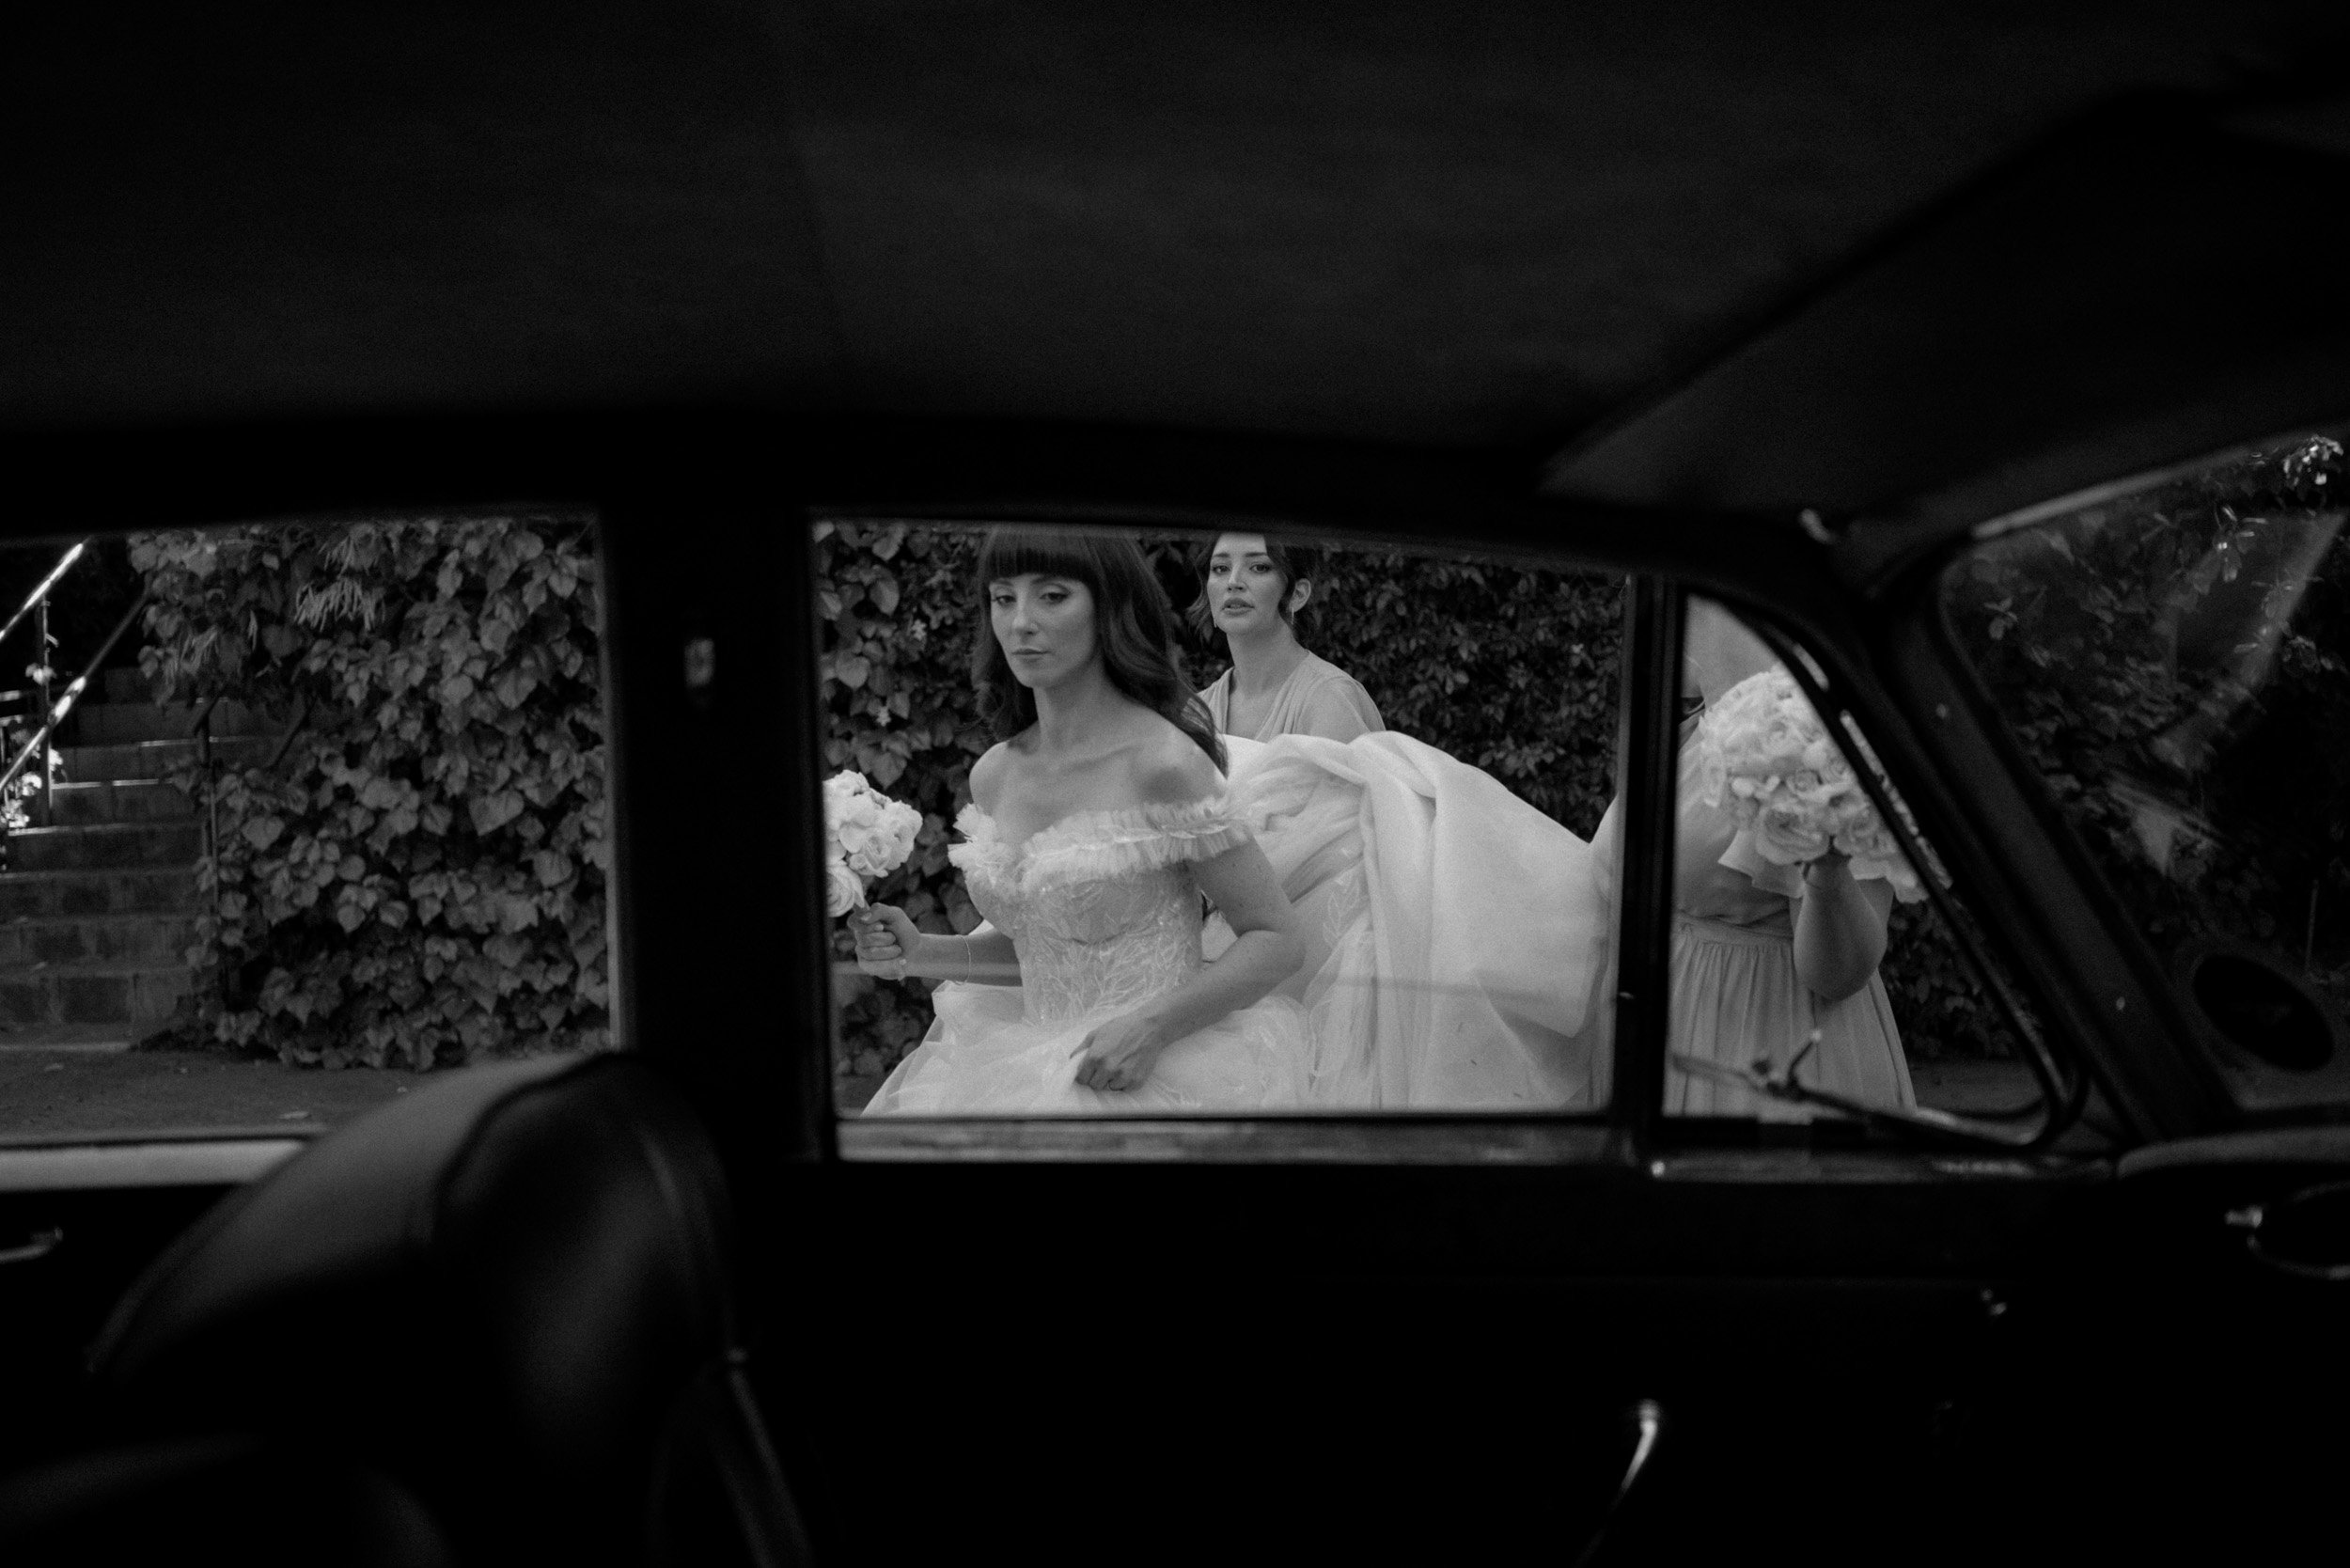 joburg-documentary-wedding-photographer-37.jpg